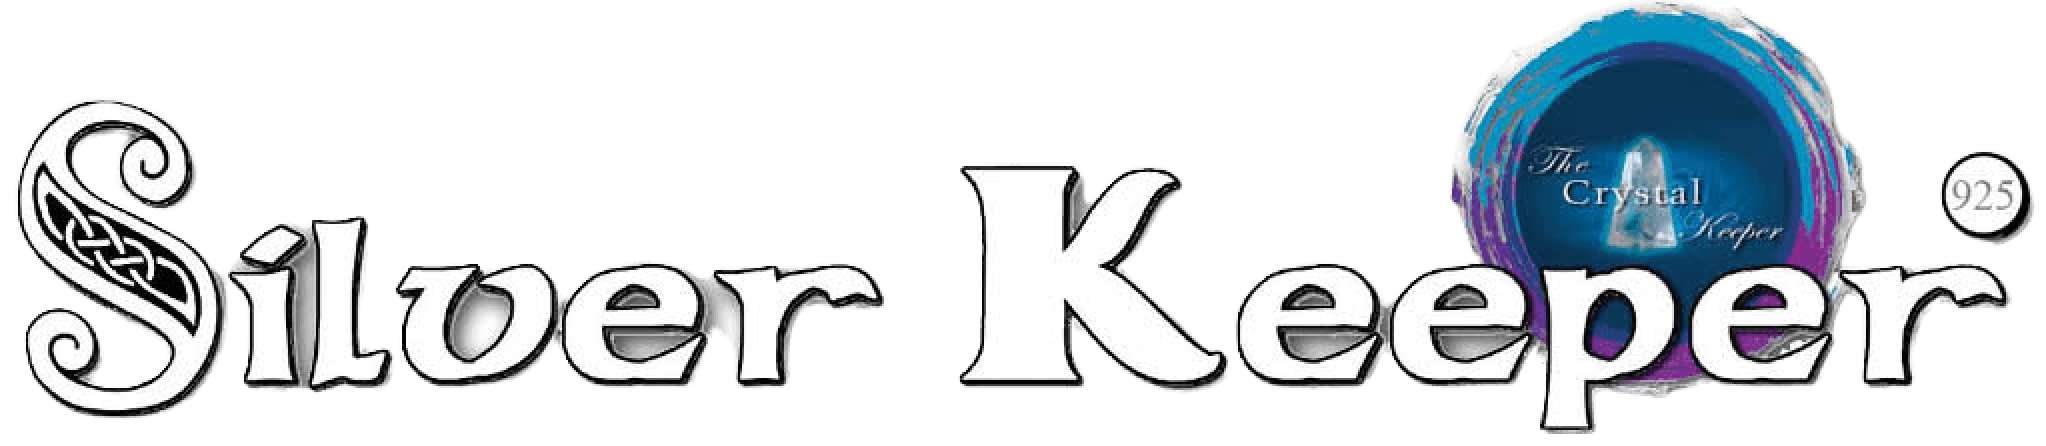 Silver Keeper Logo